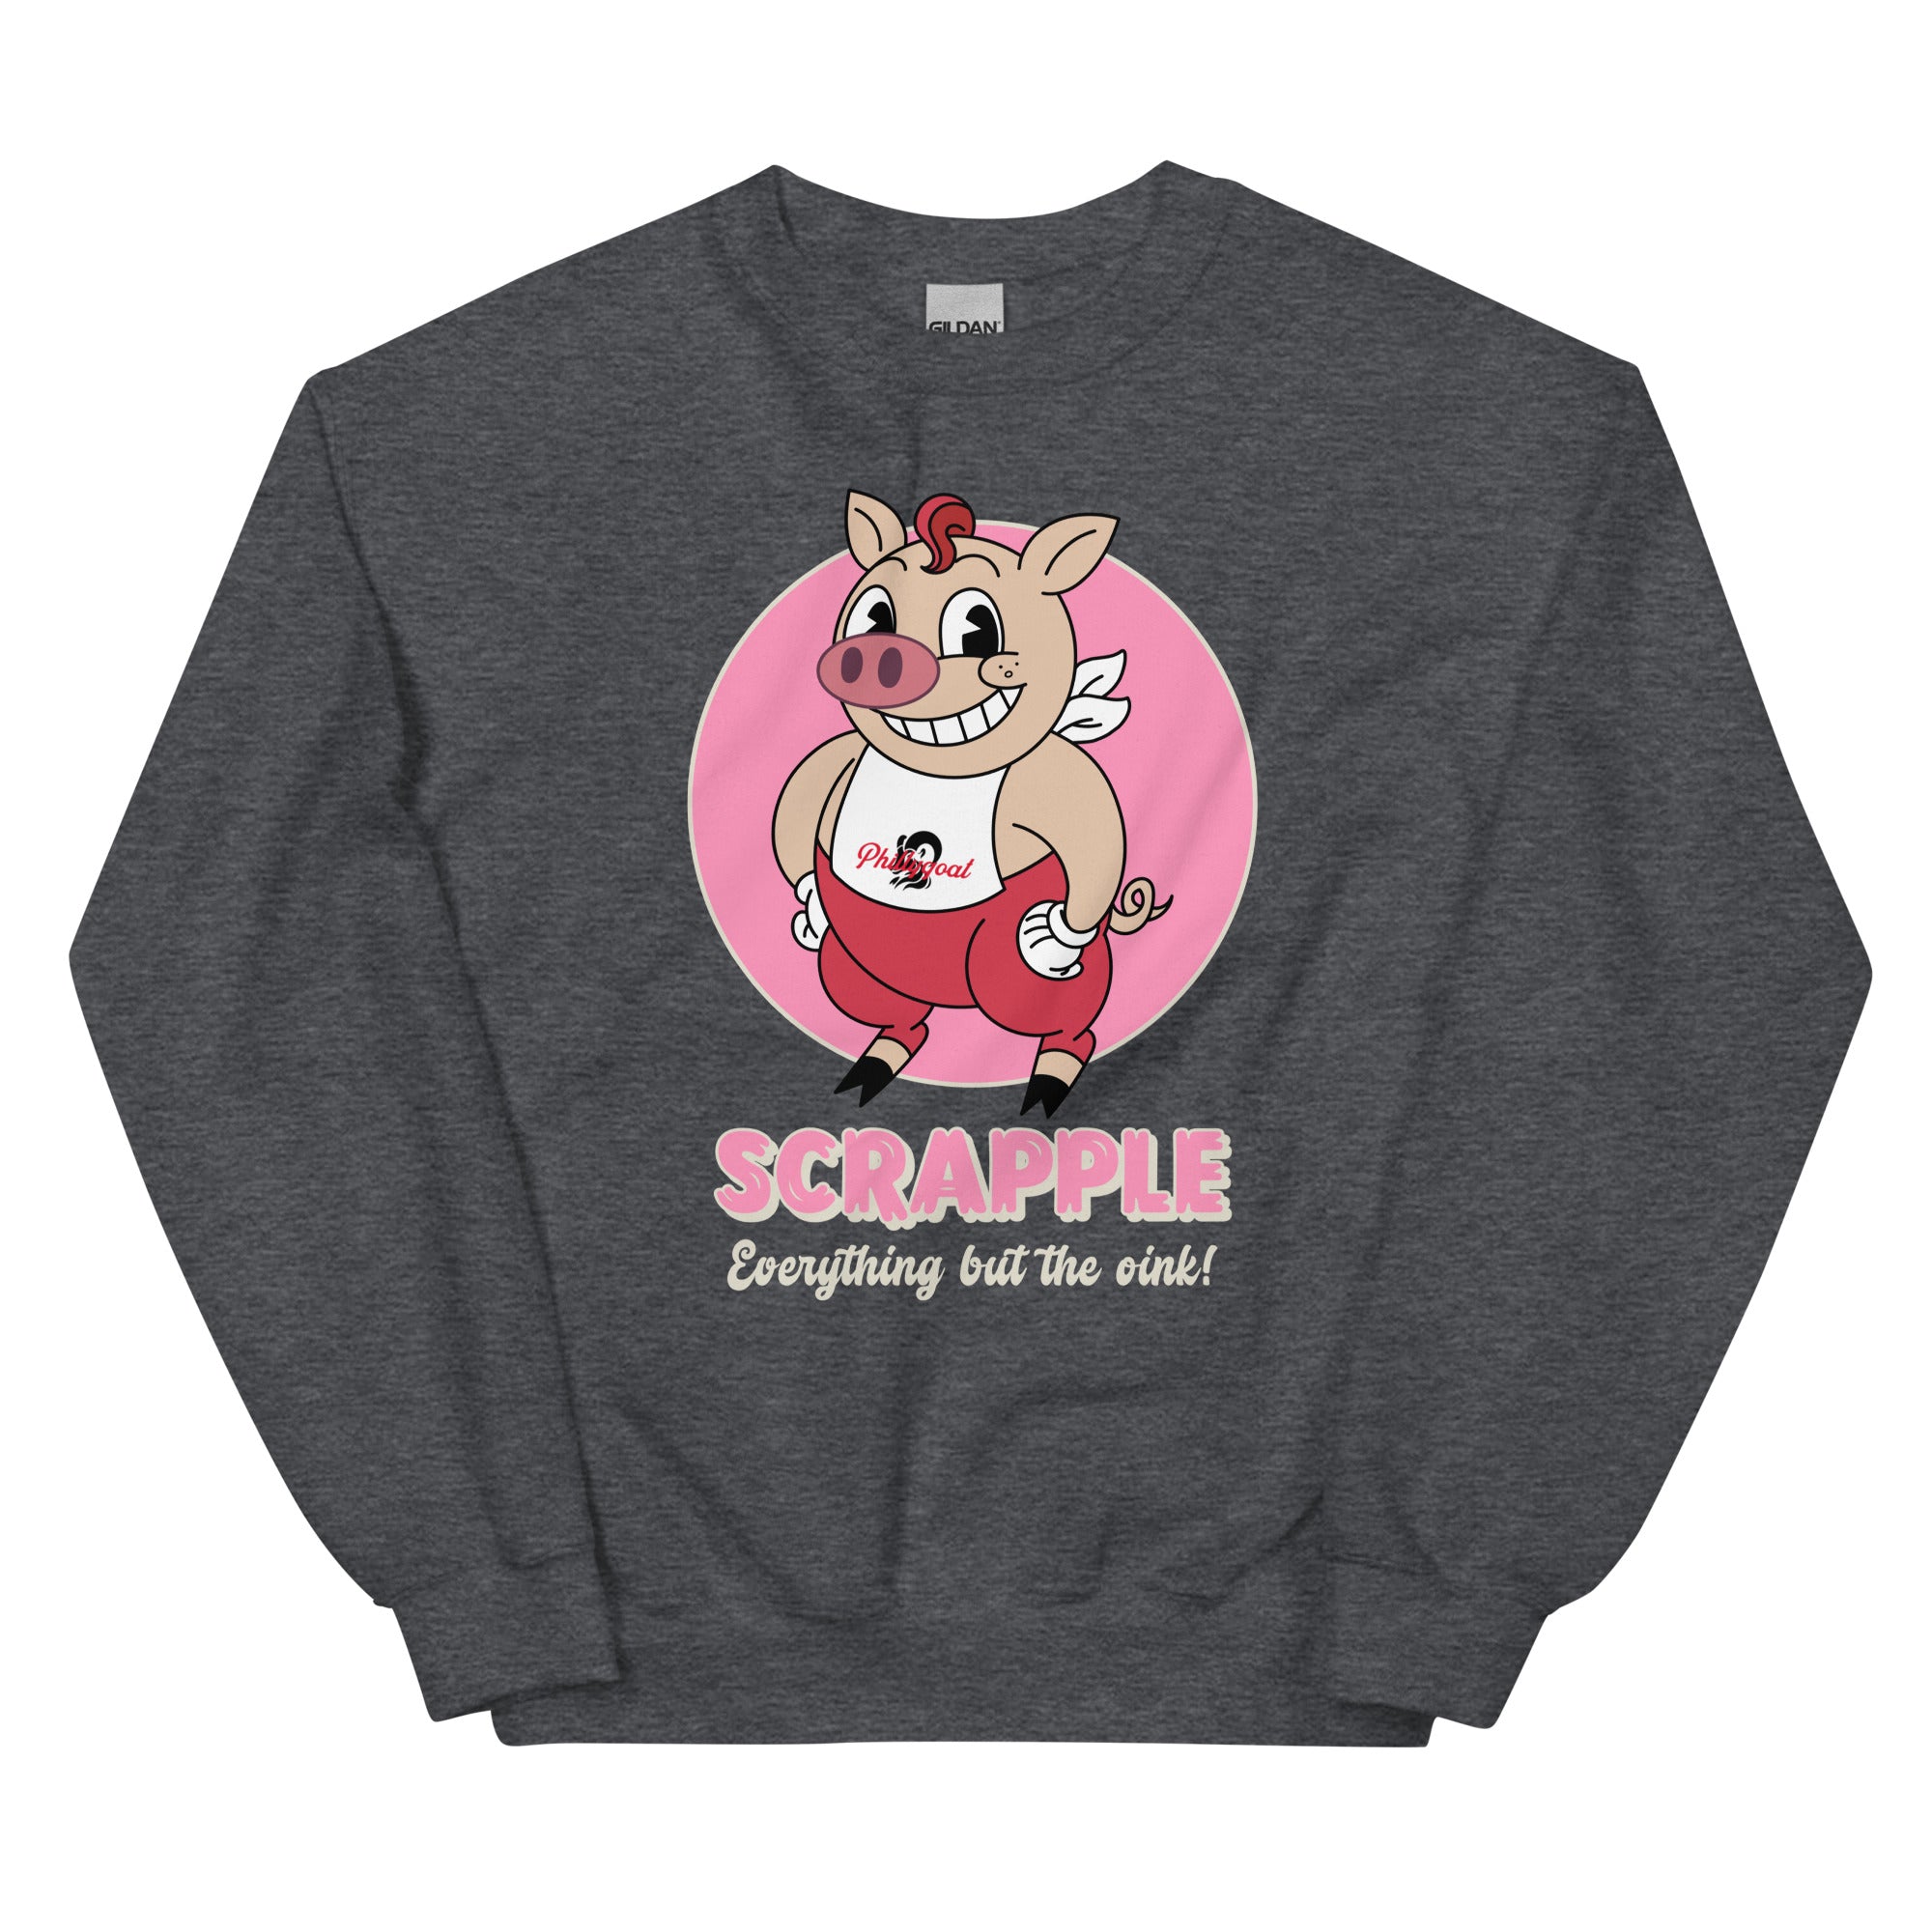 Philadelphia Philly scrapple pig dark heather grey sweatshirt Phillygoat